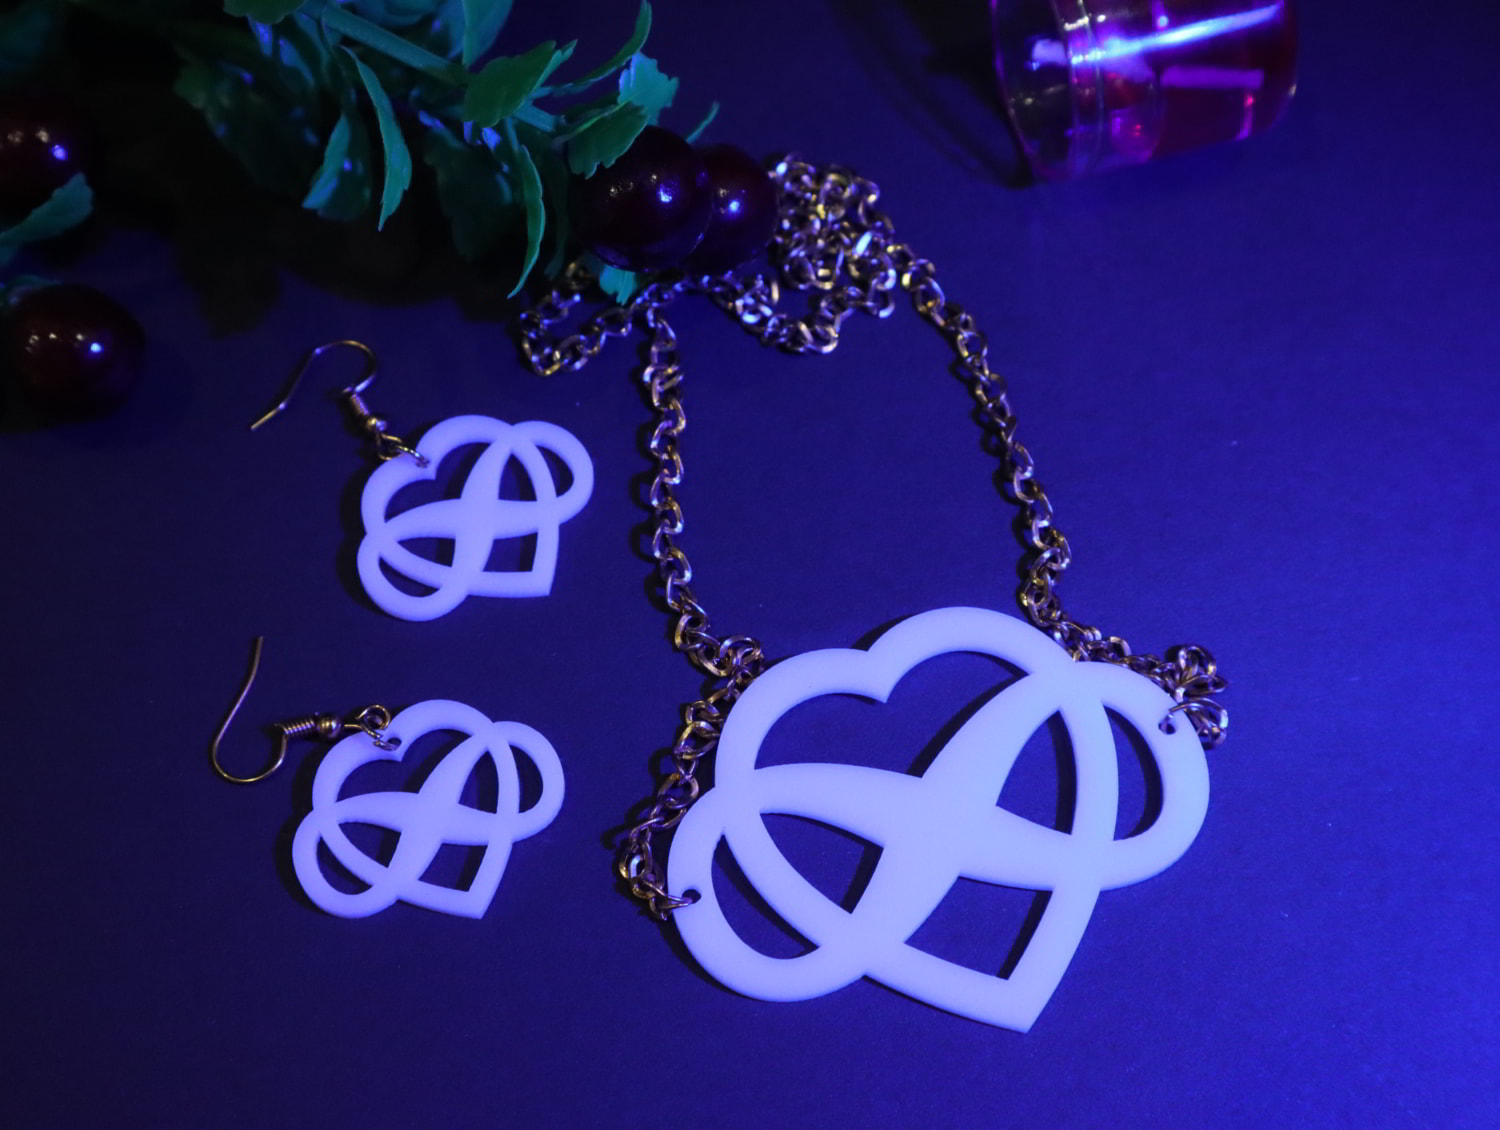 Laser Cut Acrylic Jewelry Necklace Earrings Free CDR Vectors Art